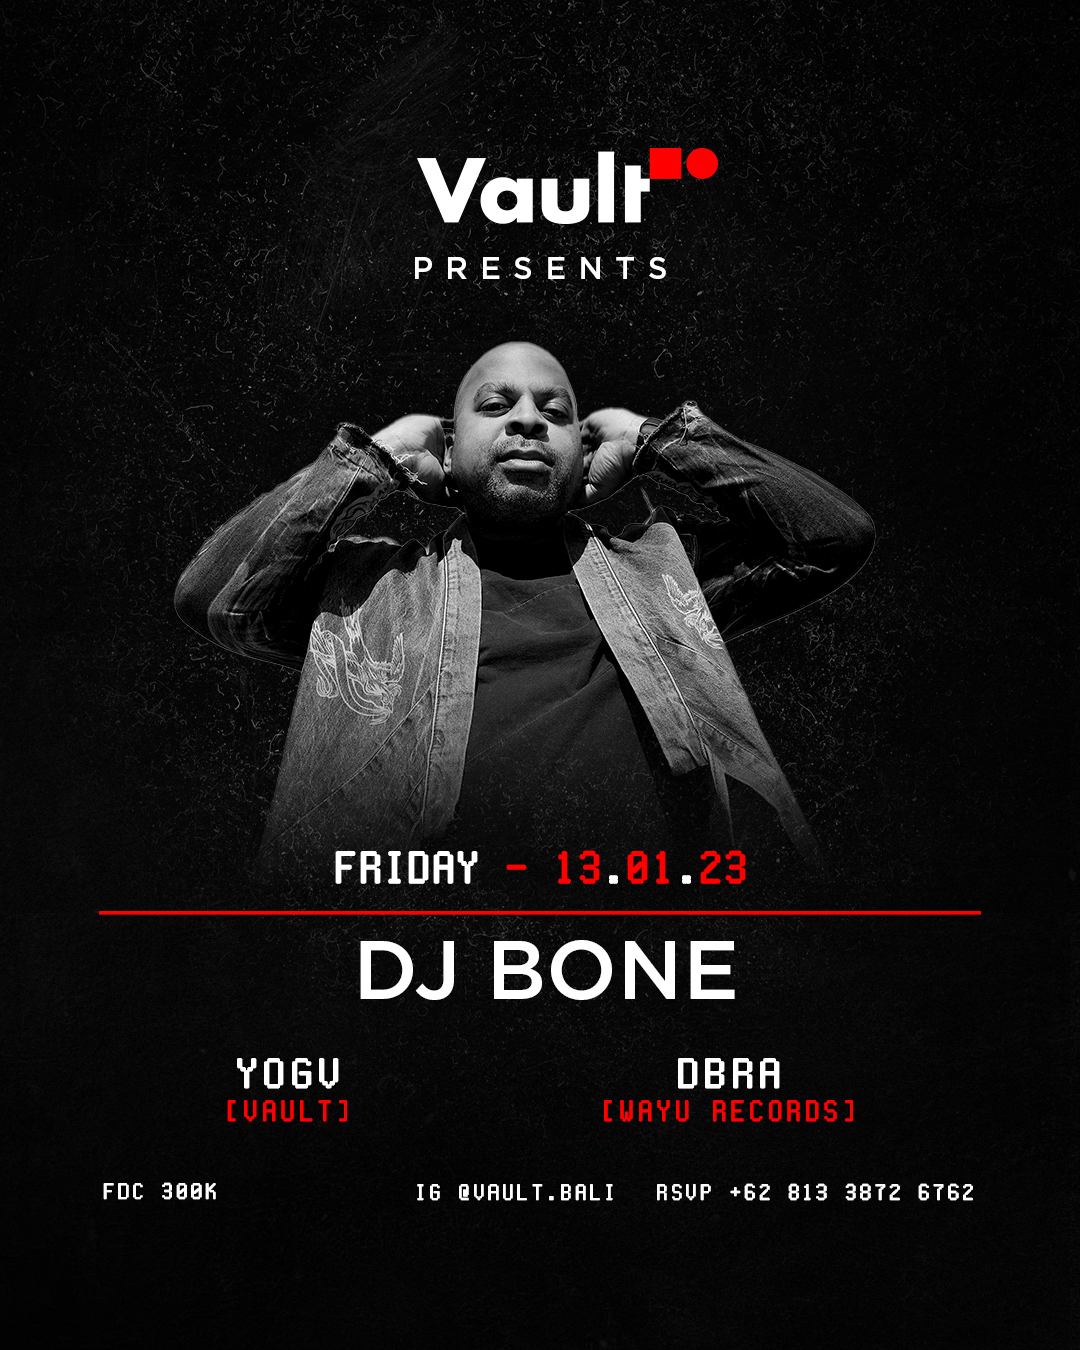 VAULT PRESENTS DJ BONE – FRIDAY JANUARY 13TH thumbnail image